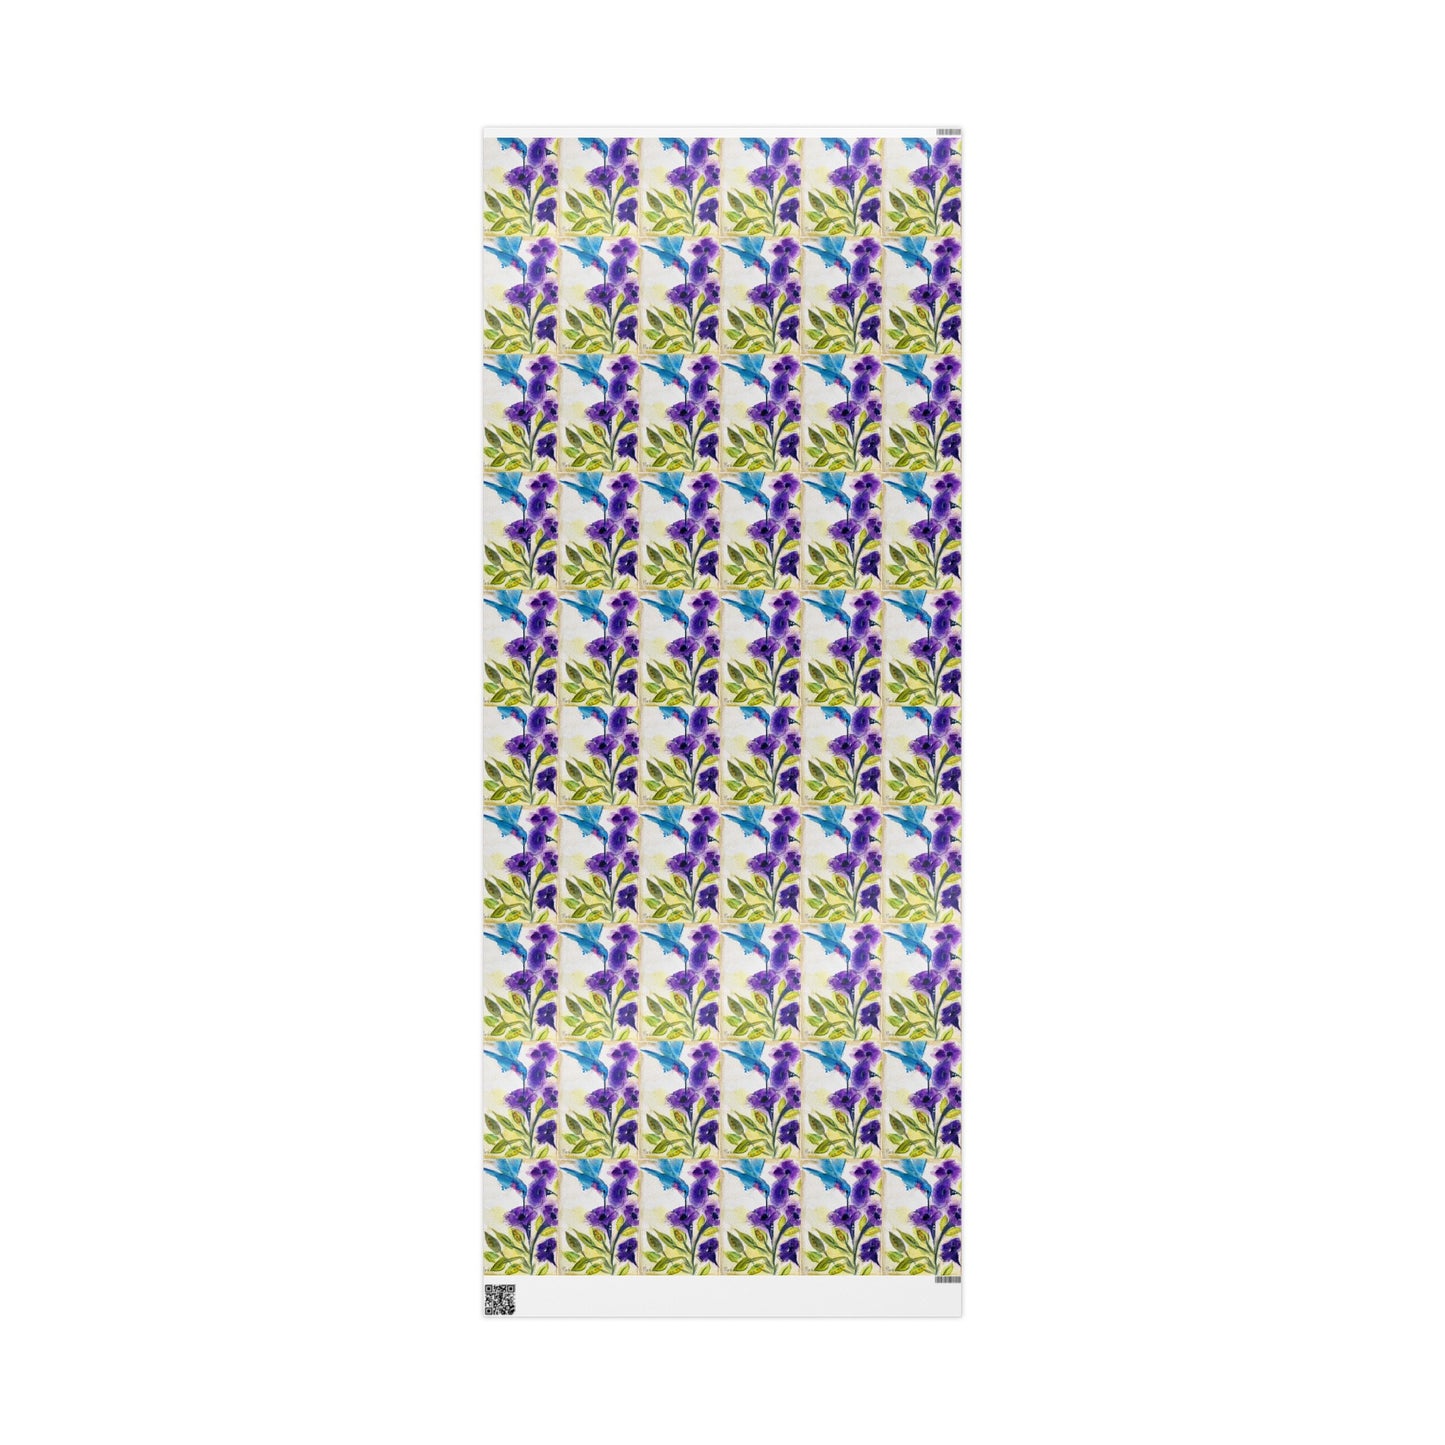 Papeles De Regalo Colibrí en flores de tubo moradas (3 tamaños)